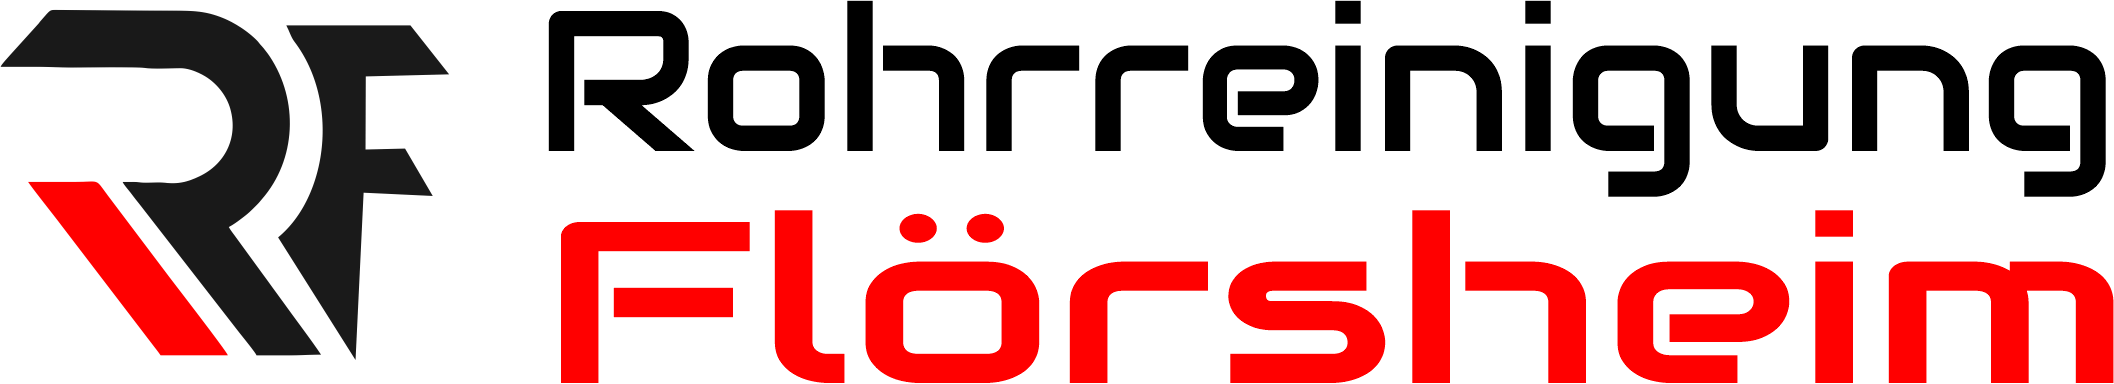 Rohrreinigung Flörsheim Logo